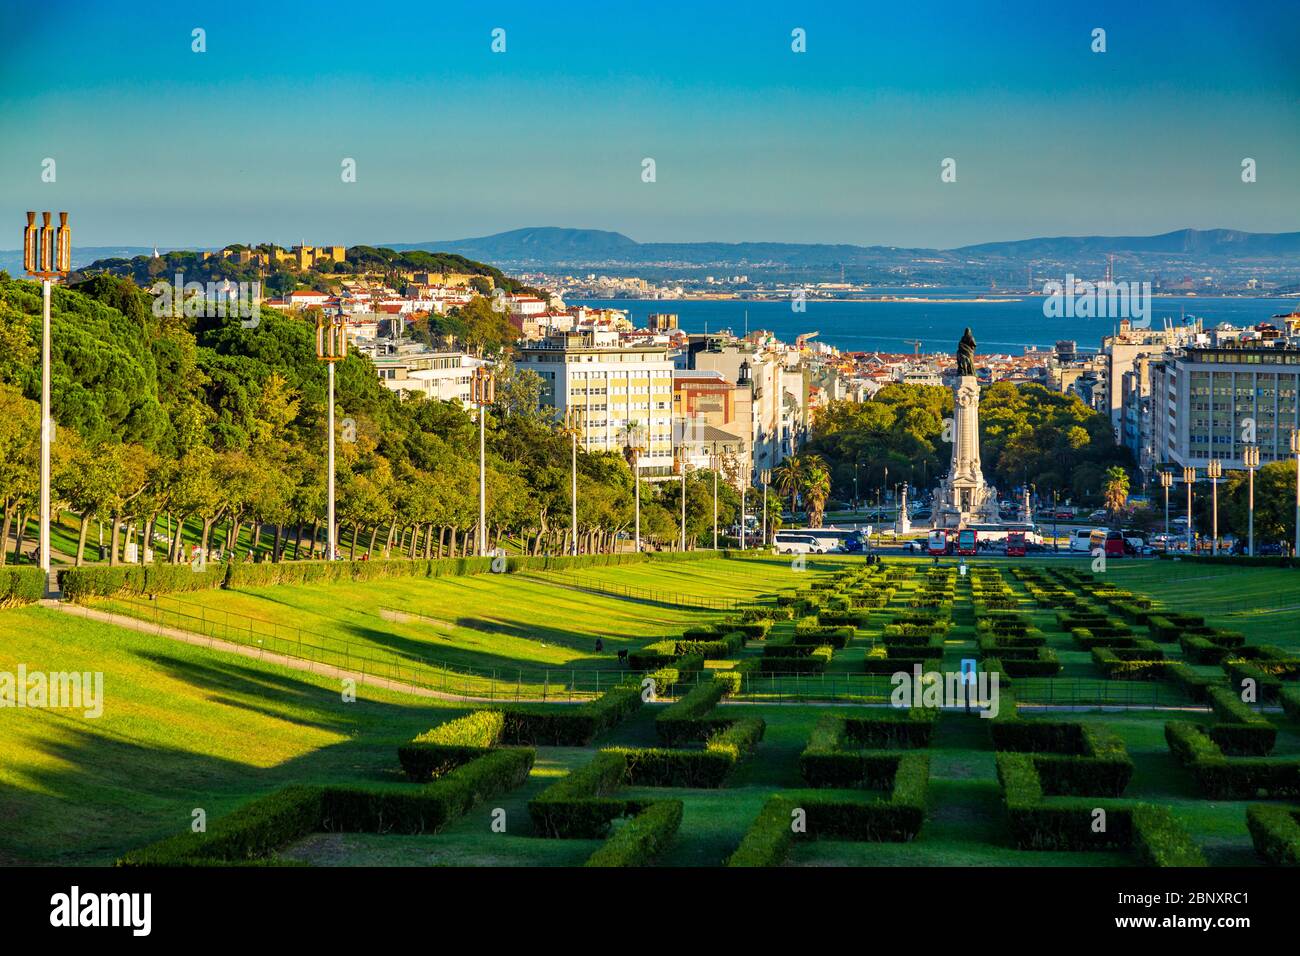 Eduardo VII park located in city of Lisbon, Portugal Stock Photo